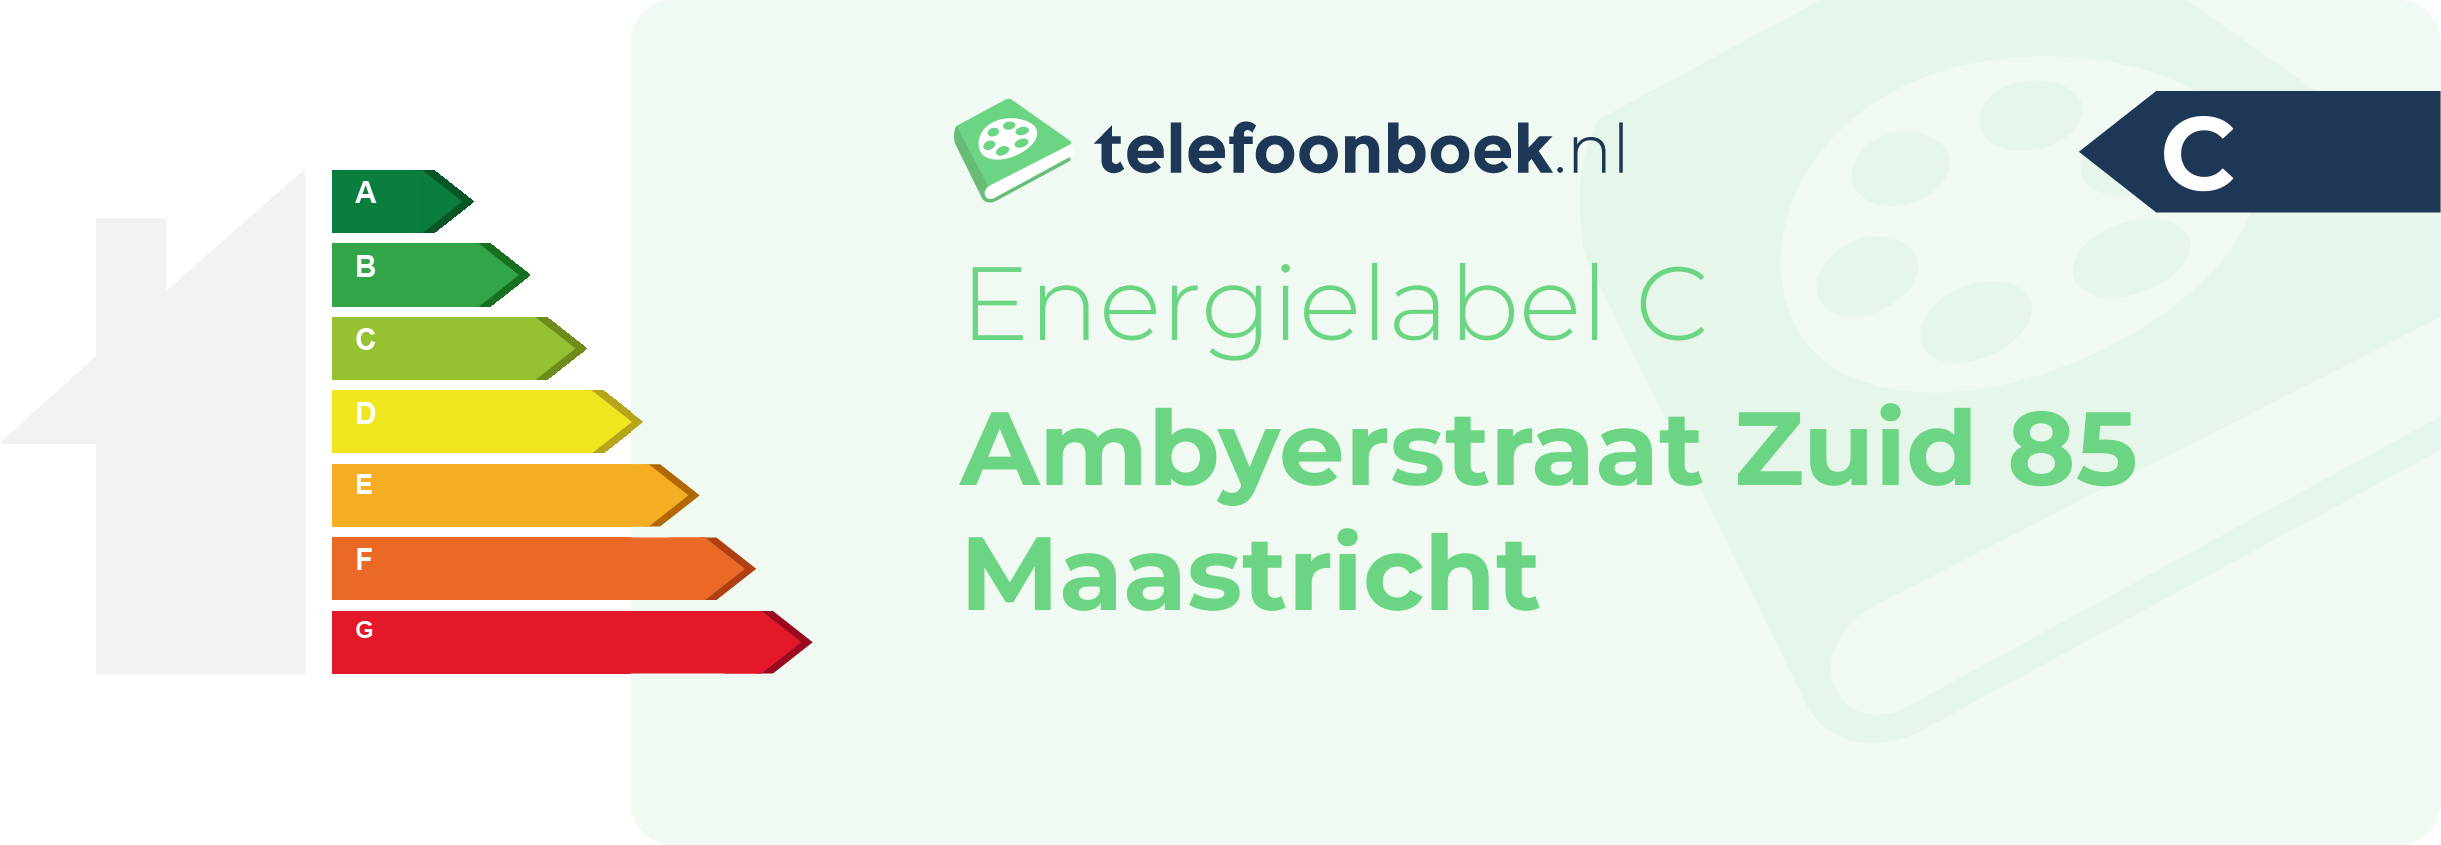 Energielabel Ambyerstraat Zuid 85 Maastricht